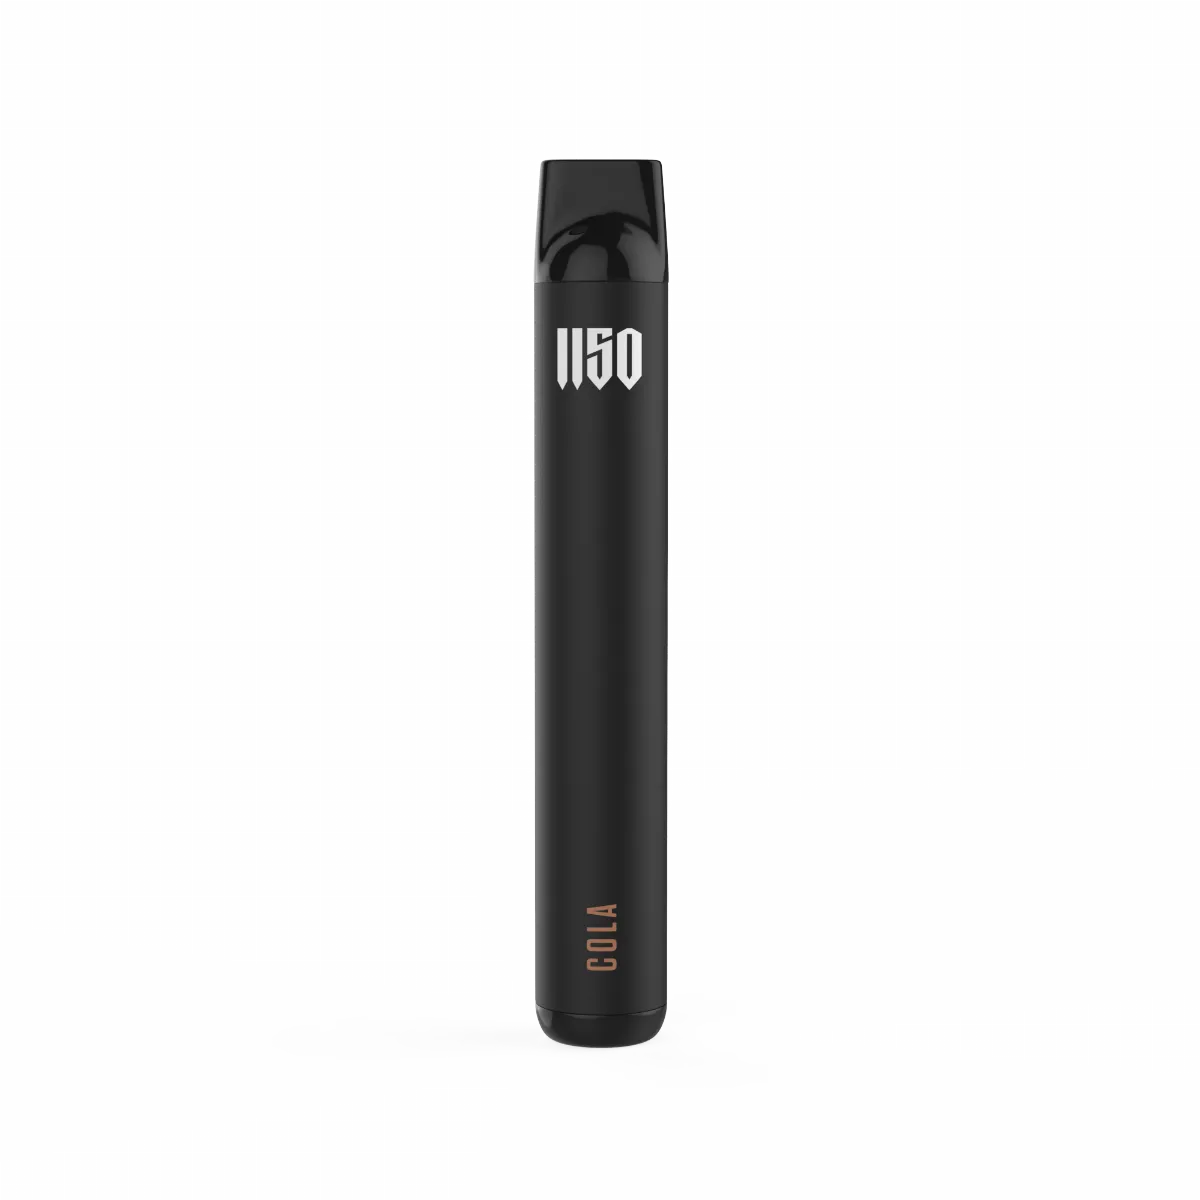 1150 Vapestick Cola E-Zigarette / Vape Online Kaufen